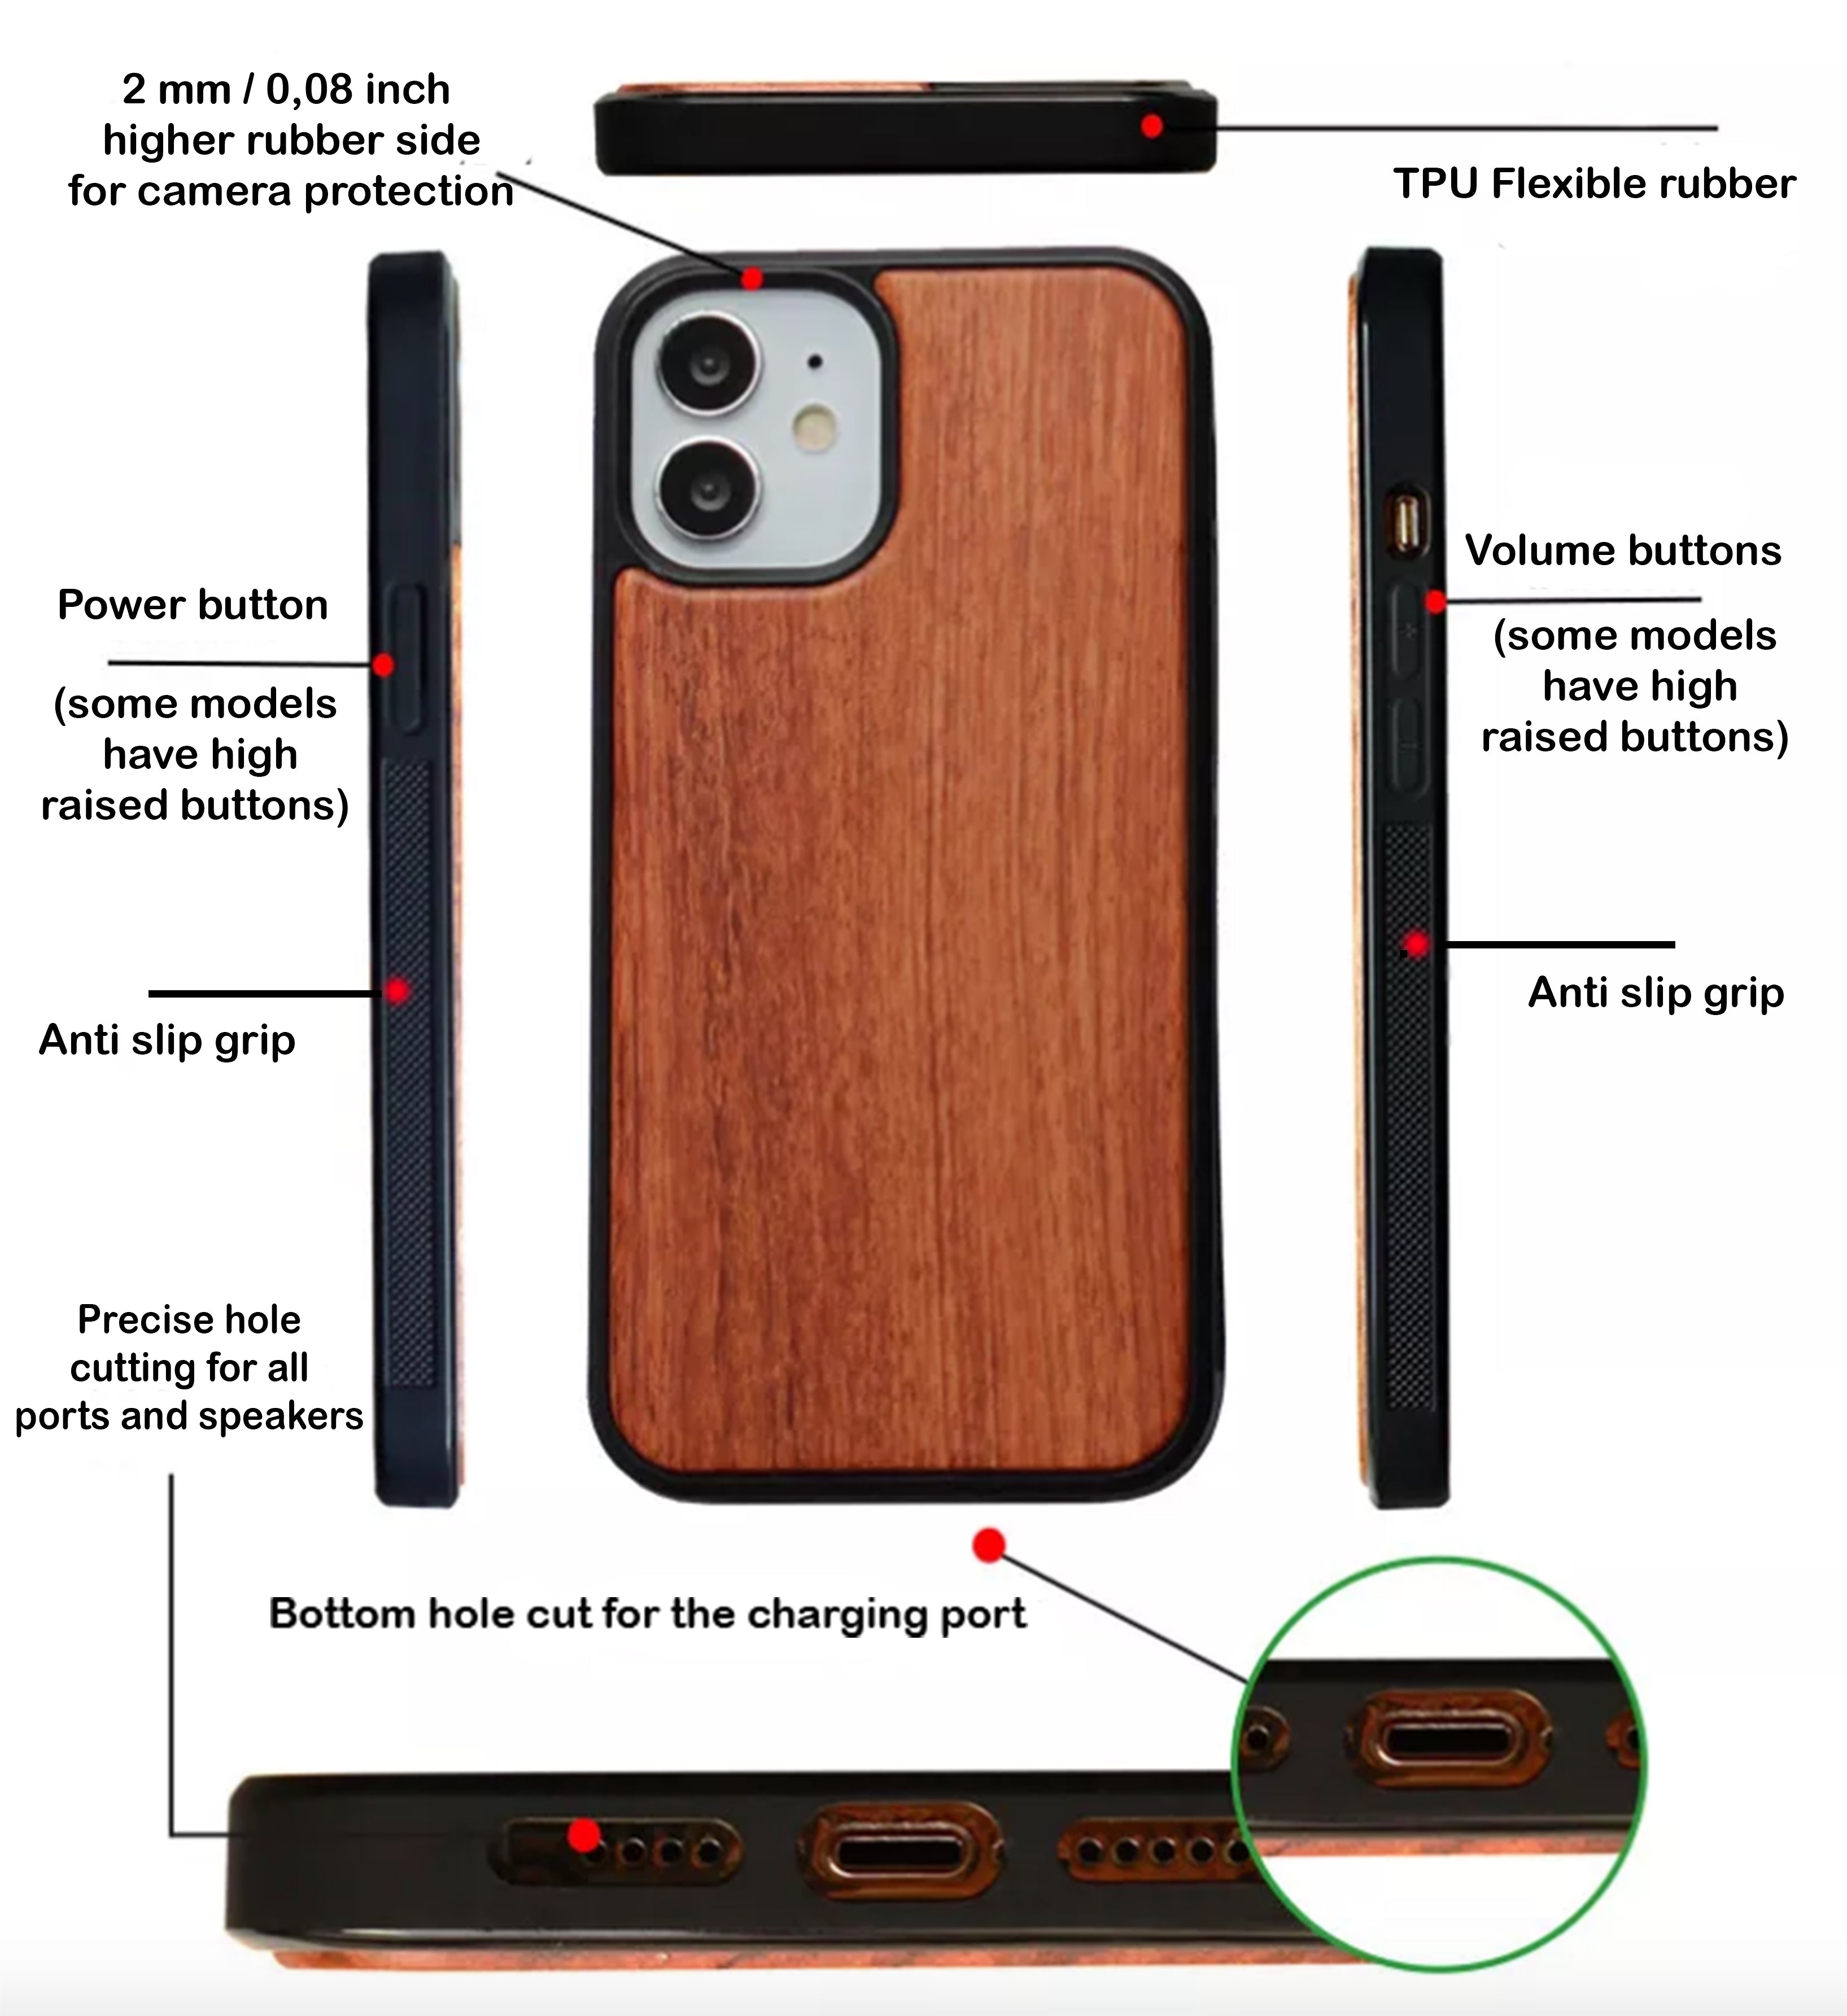 iPhone & Samsung Galaxy Wood Phone Case -   Snake Eye Gothic Pattern